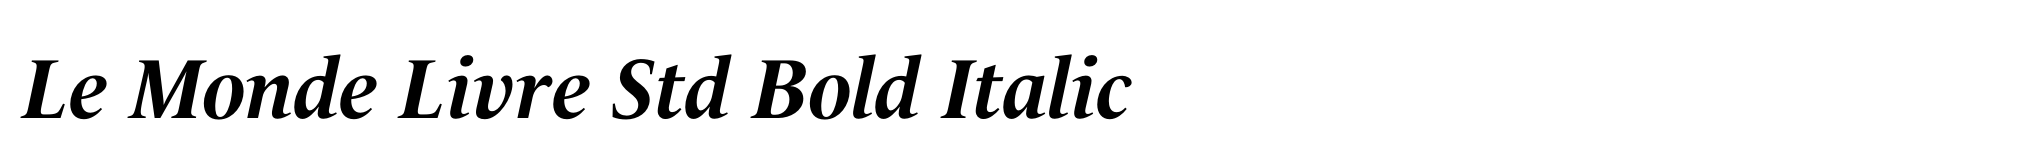 Le Monde Livre Std Bold Italic image